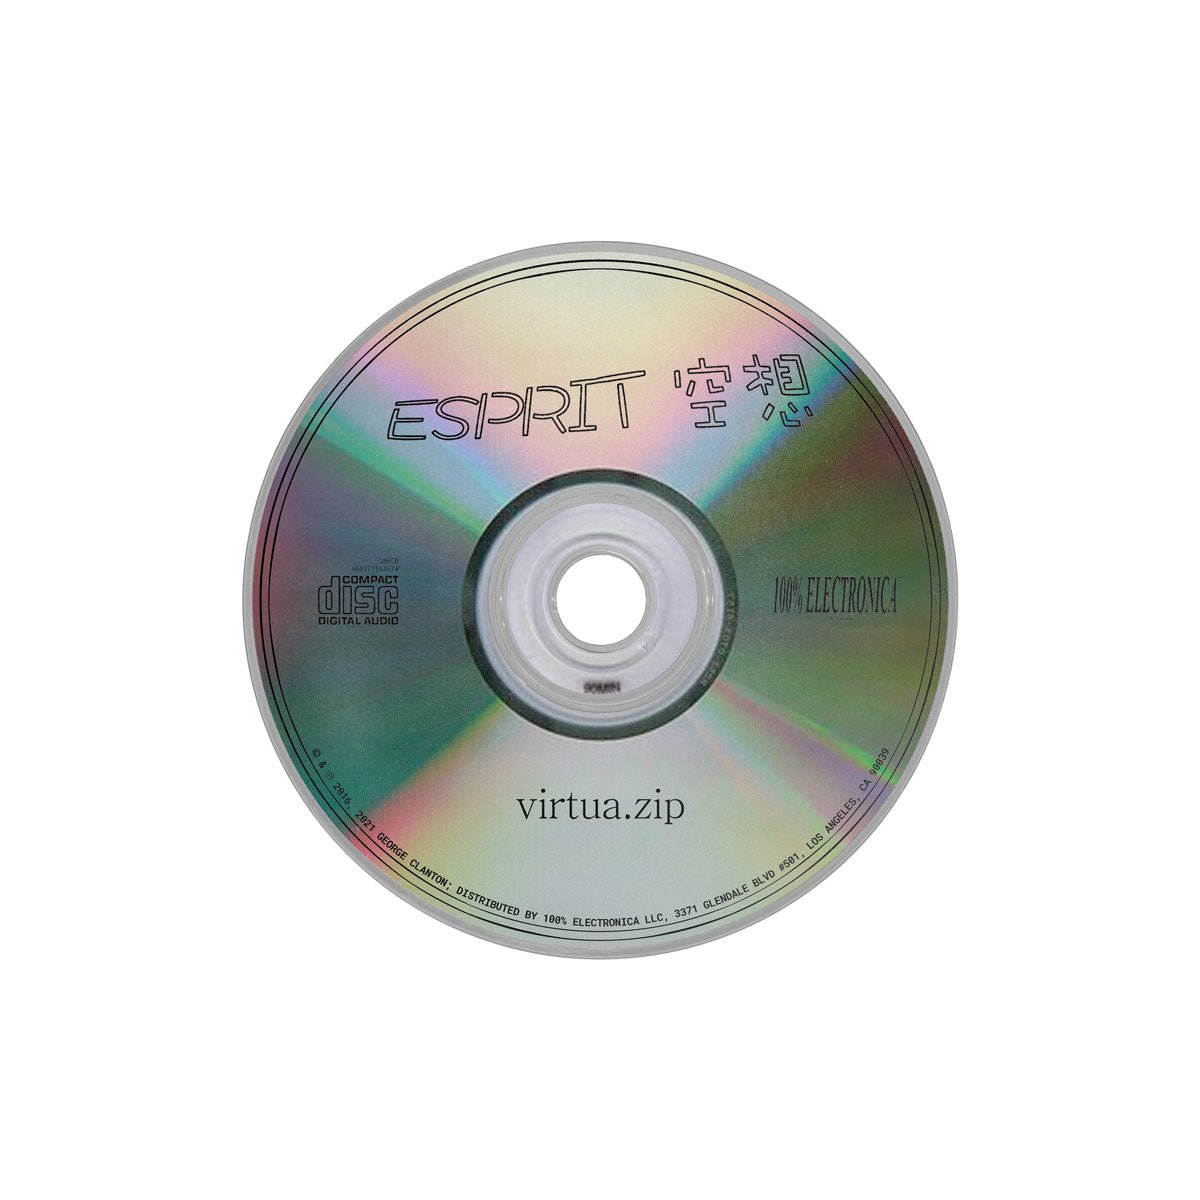 ESPRIT 空想 - virtua.zip CD - 100% Electronica Official Store (Photo 2)